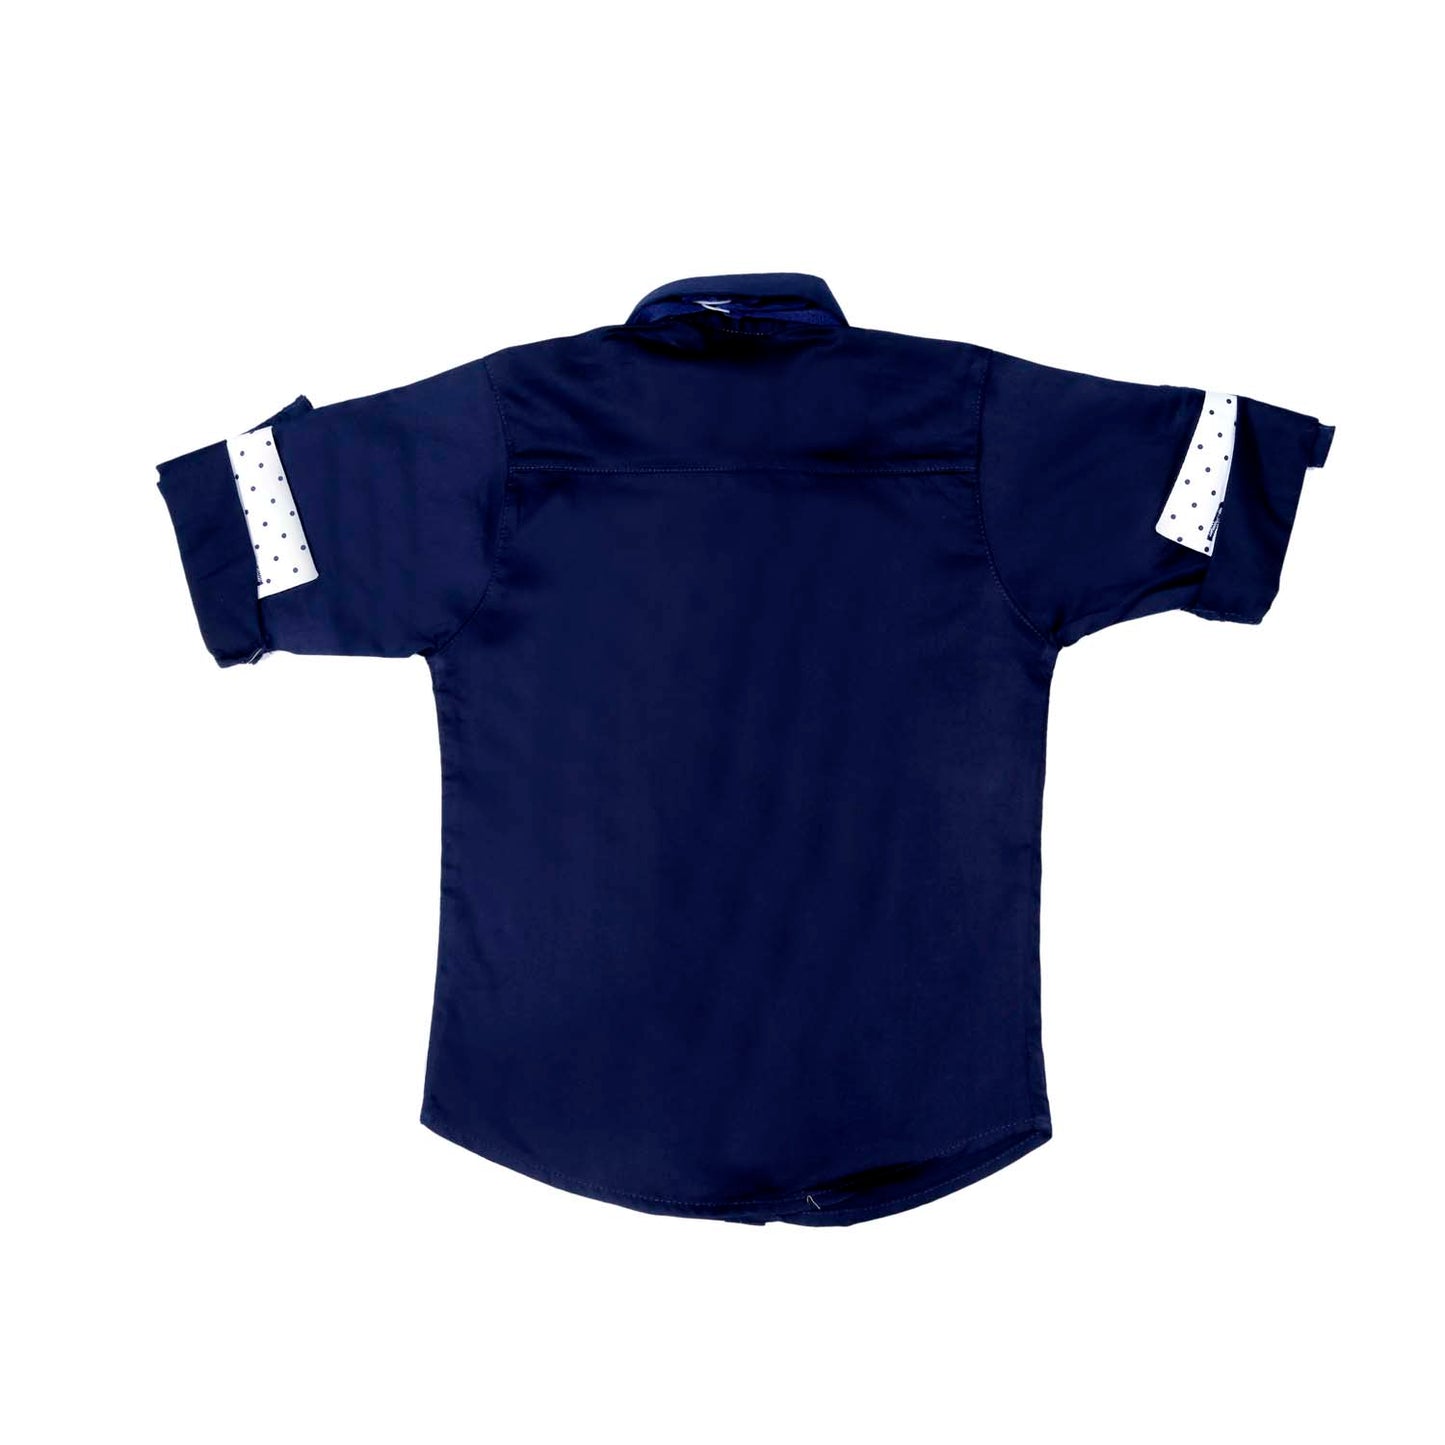 Mashup Navy Blue Solid Party Shirt- - mashup boys